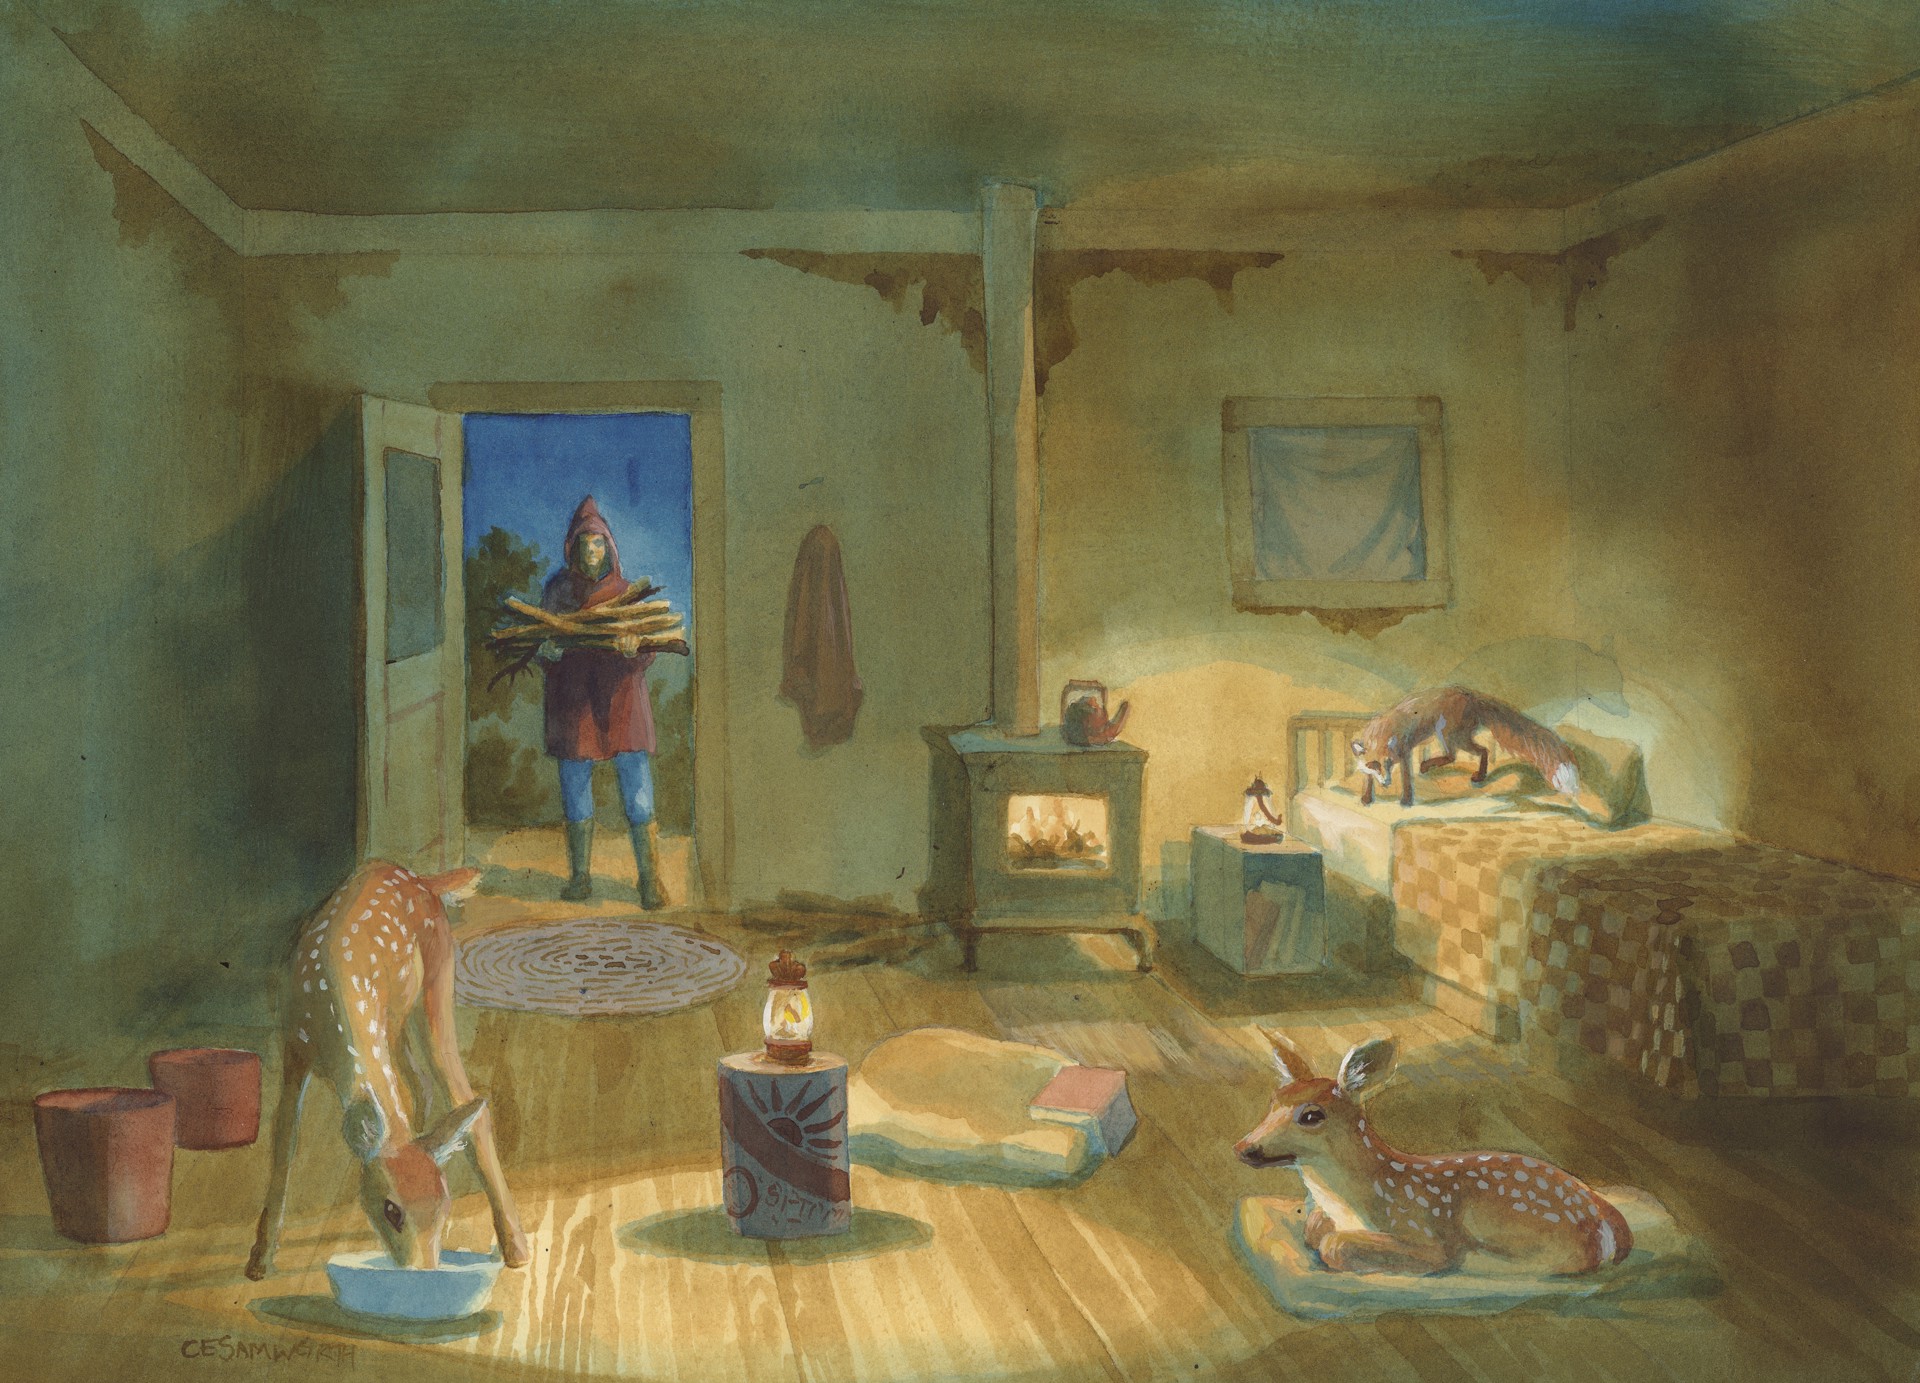 Homemaker Animals by Kate Samworth